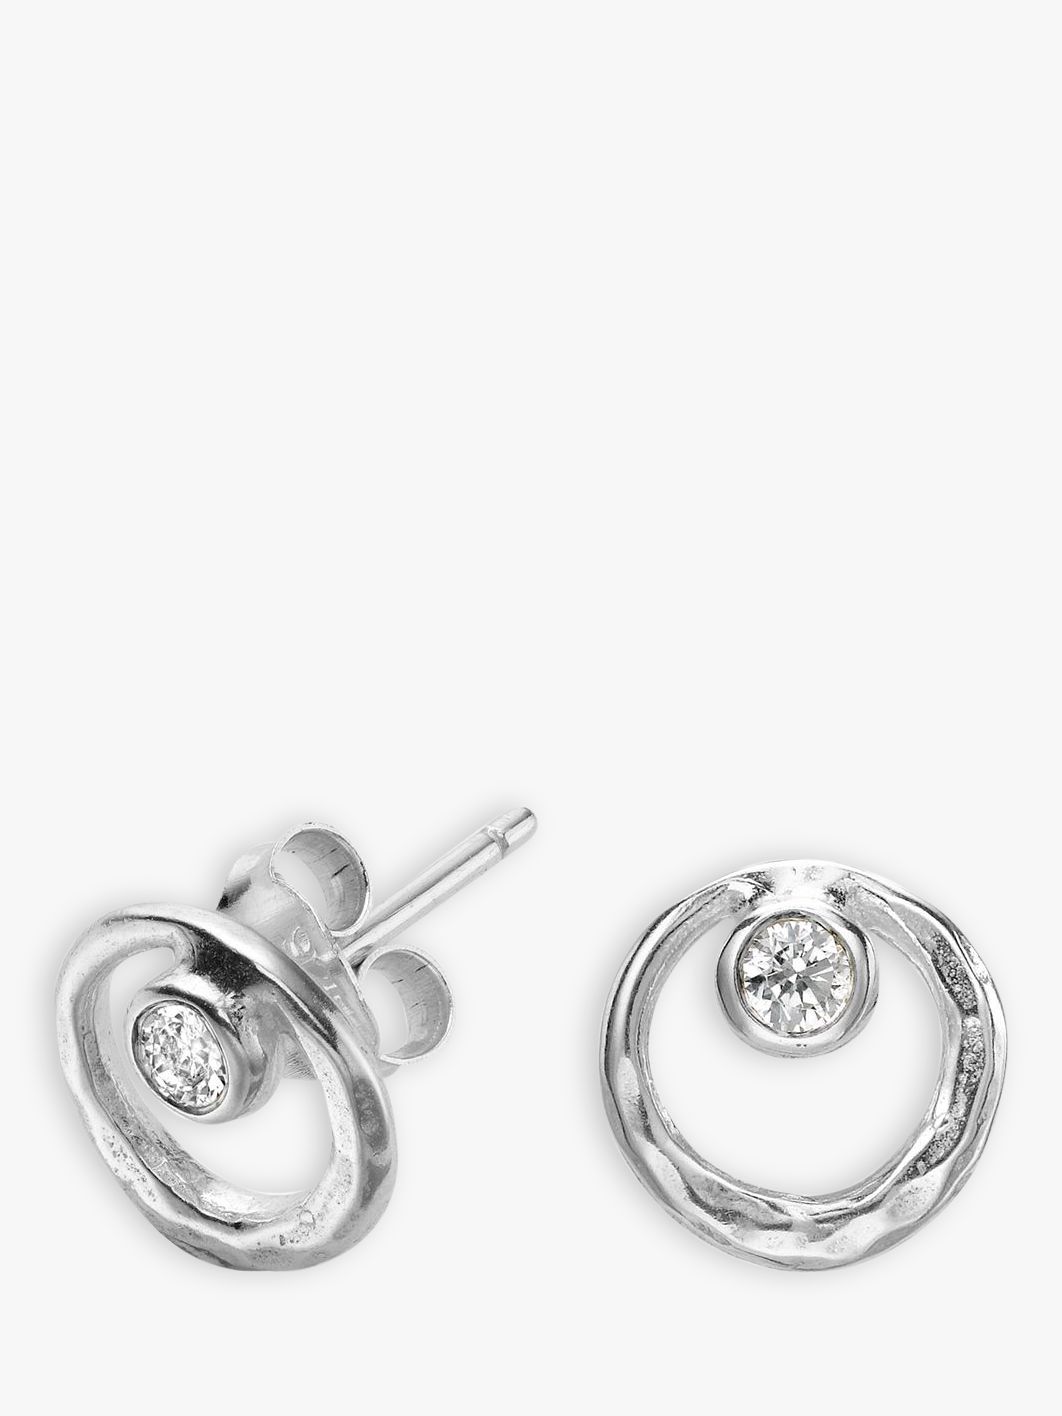 Dower & Hall Sterling Silver White Topaz Earrings, Silver